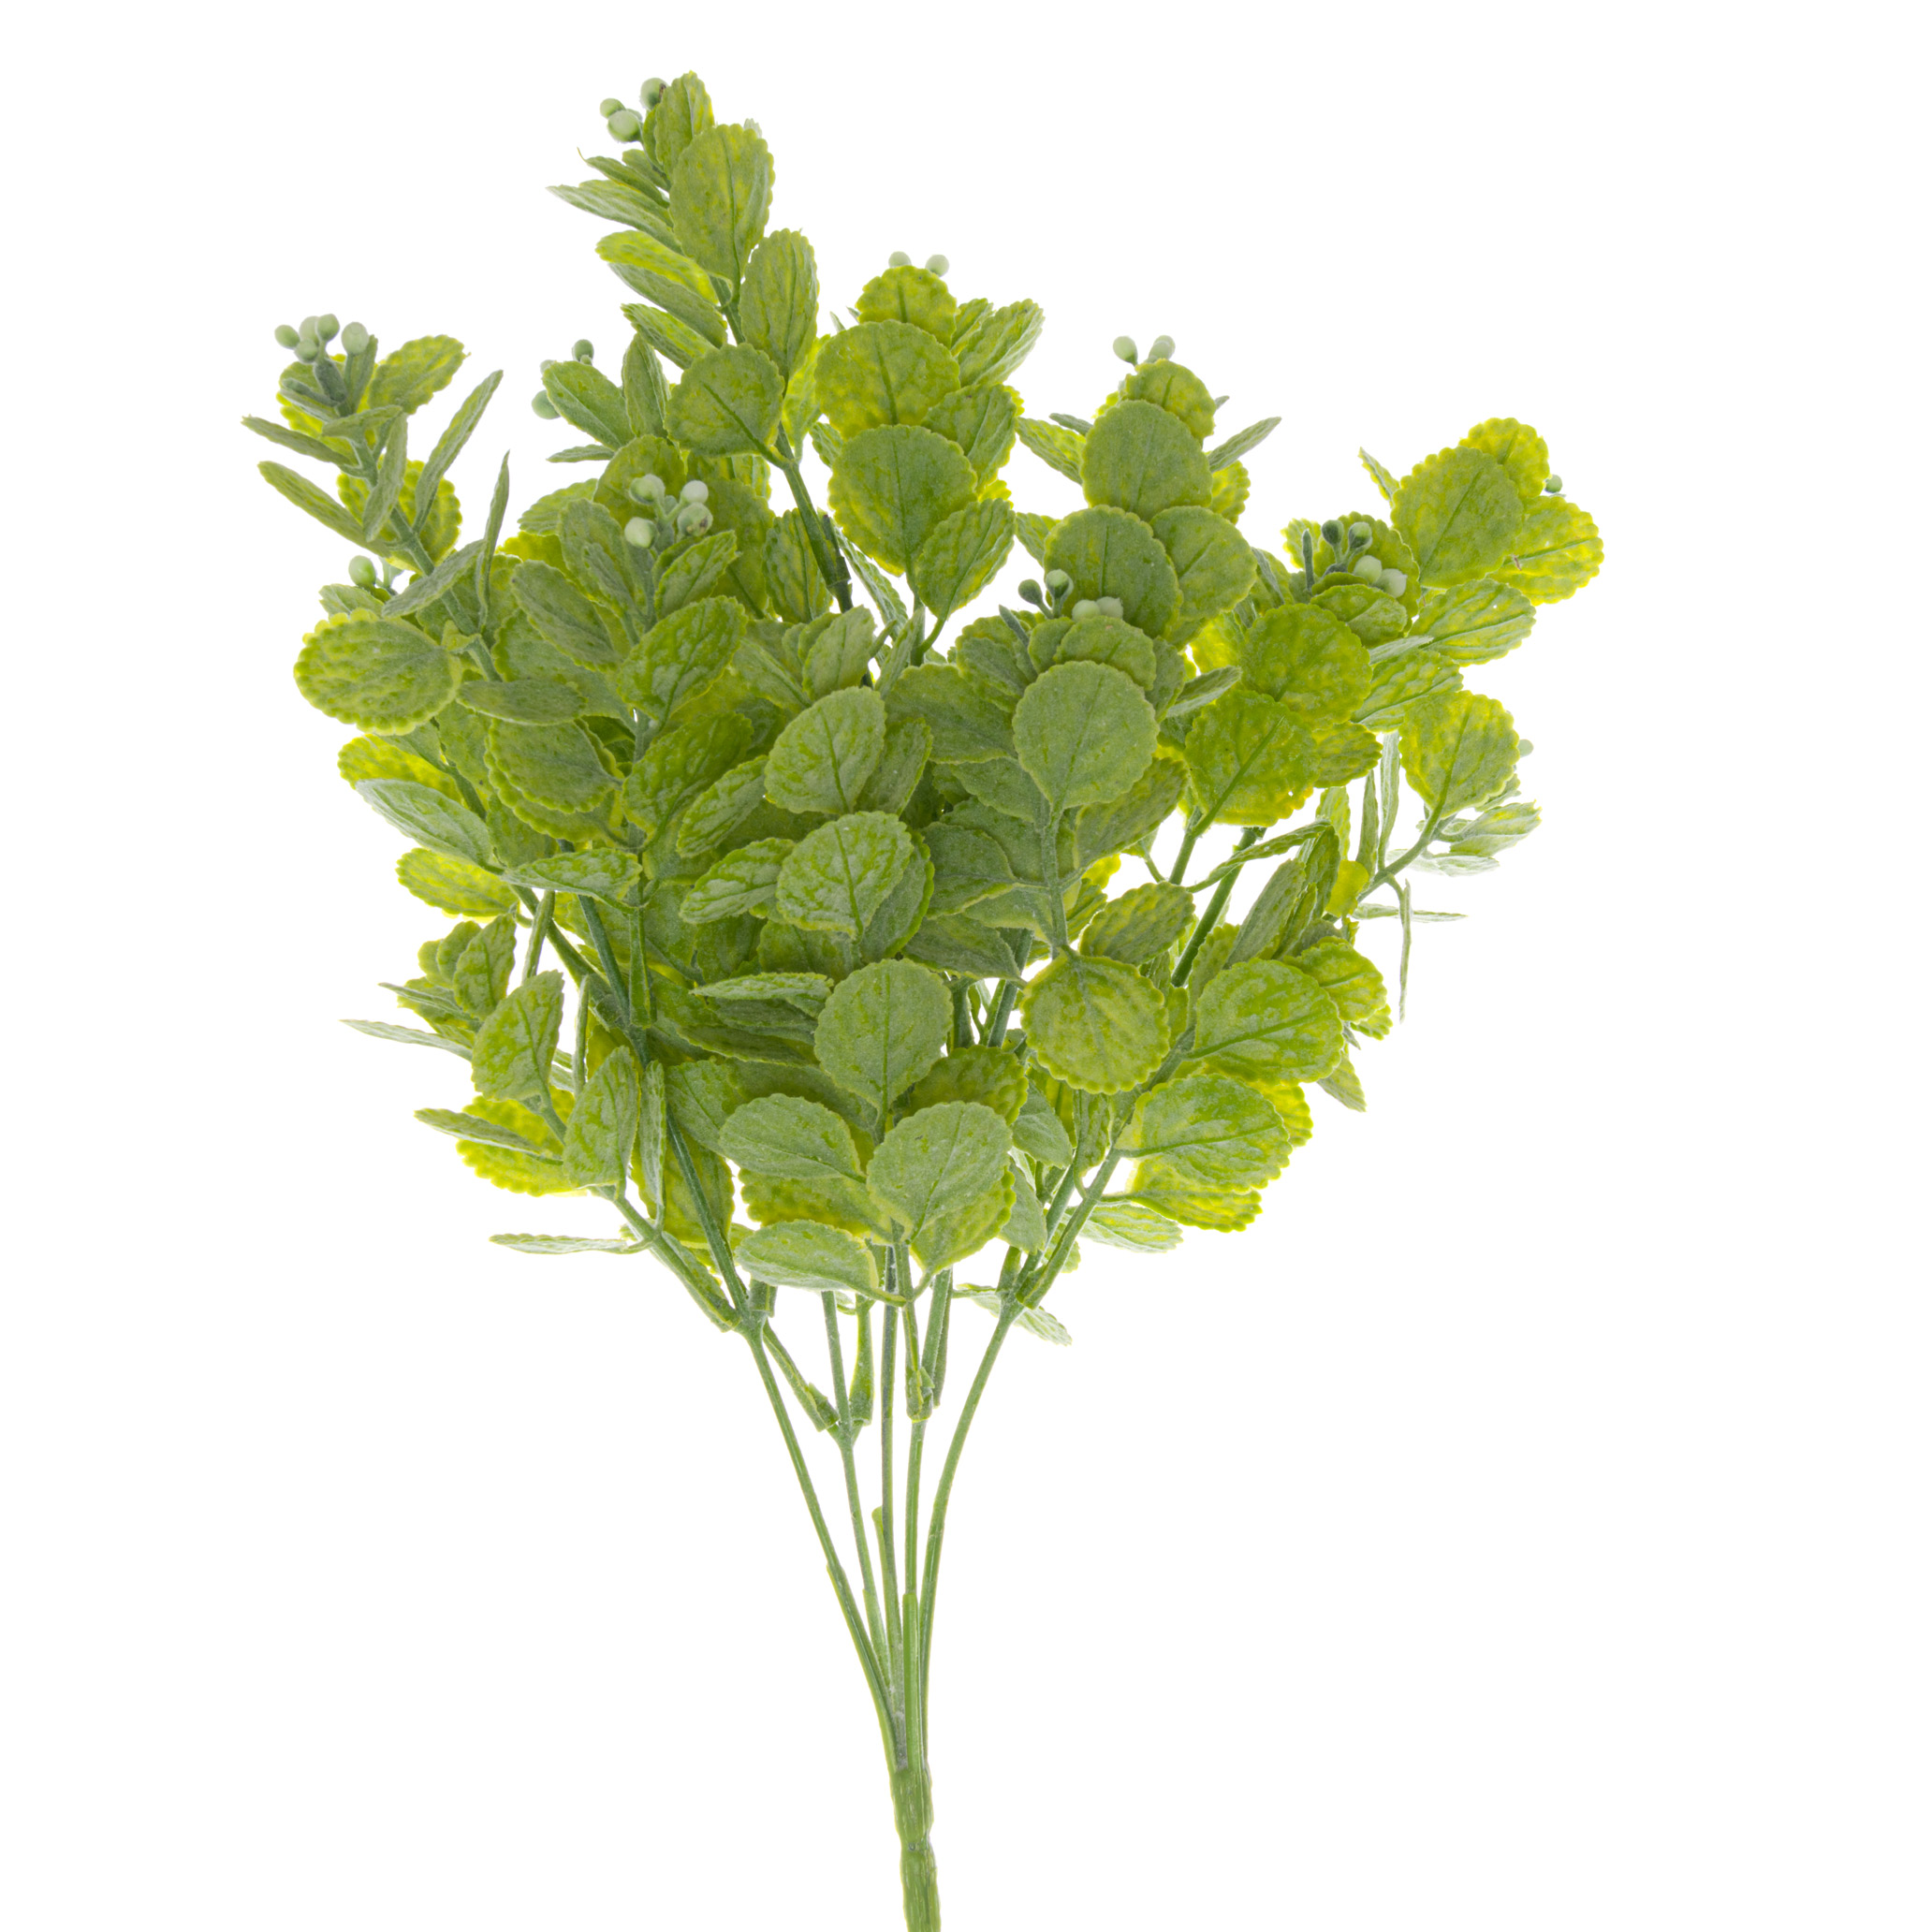 Spring Herb Greenery Bunch - Image 1